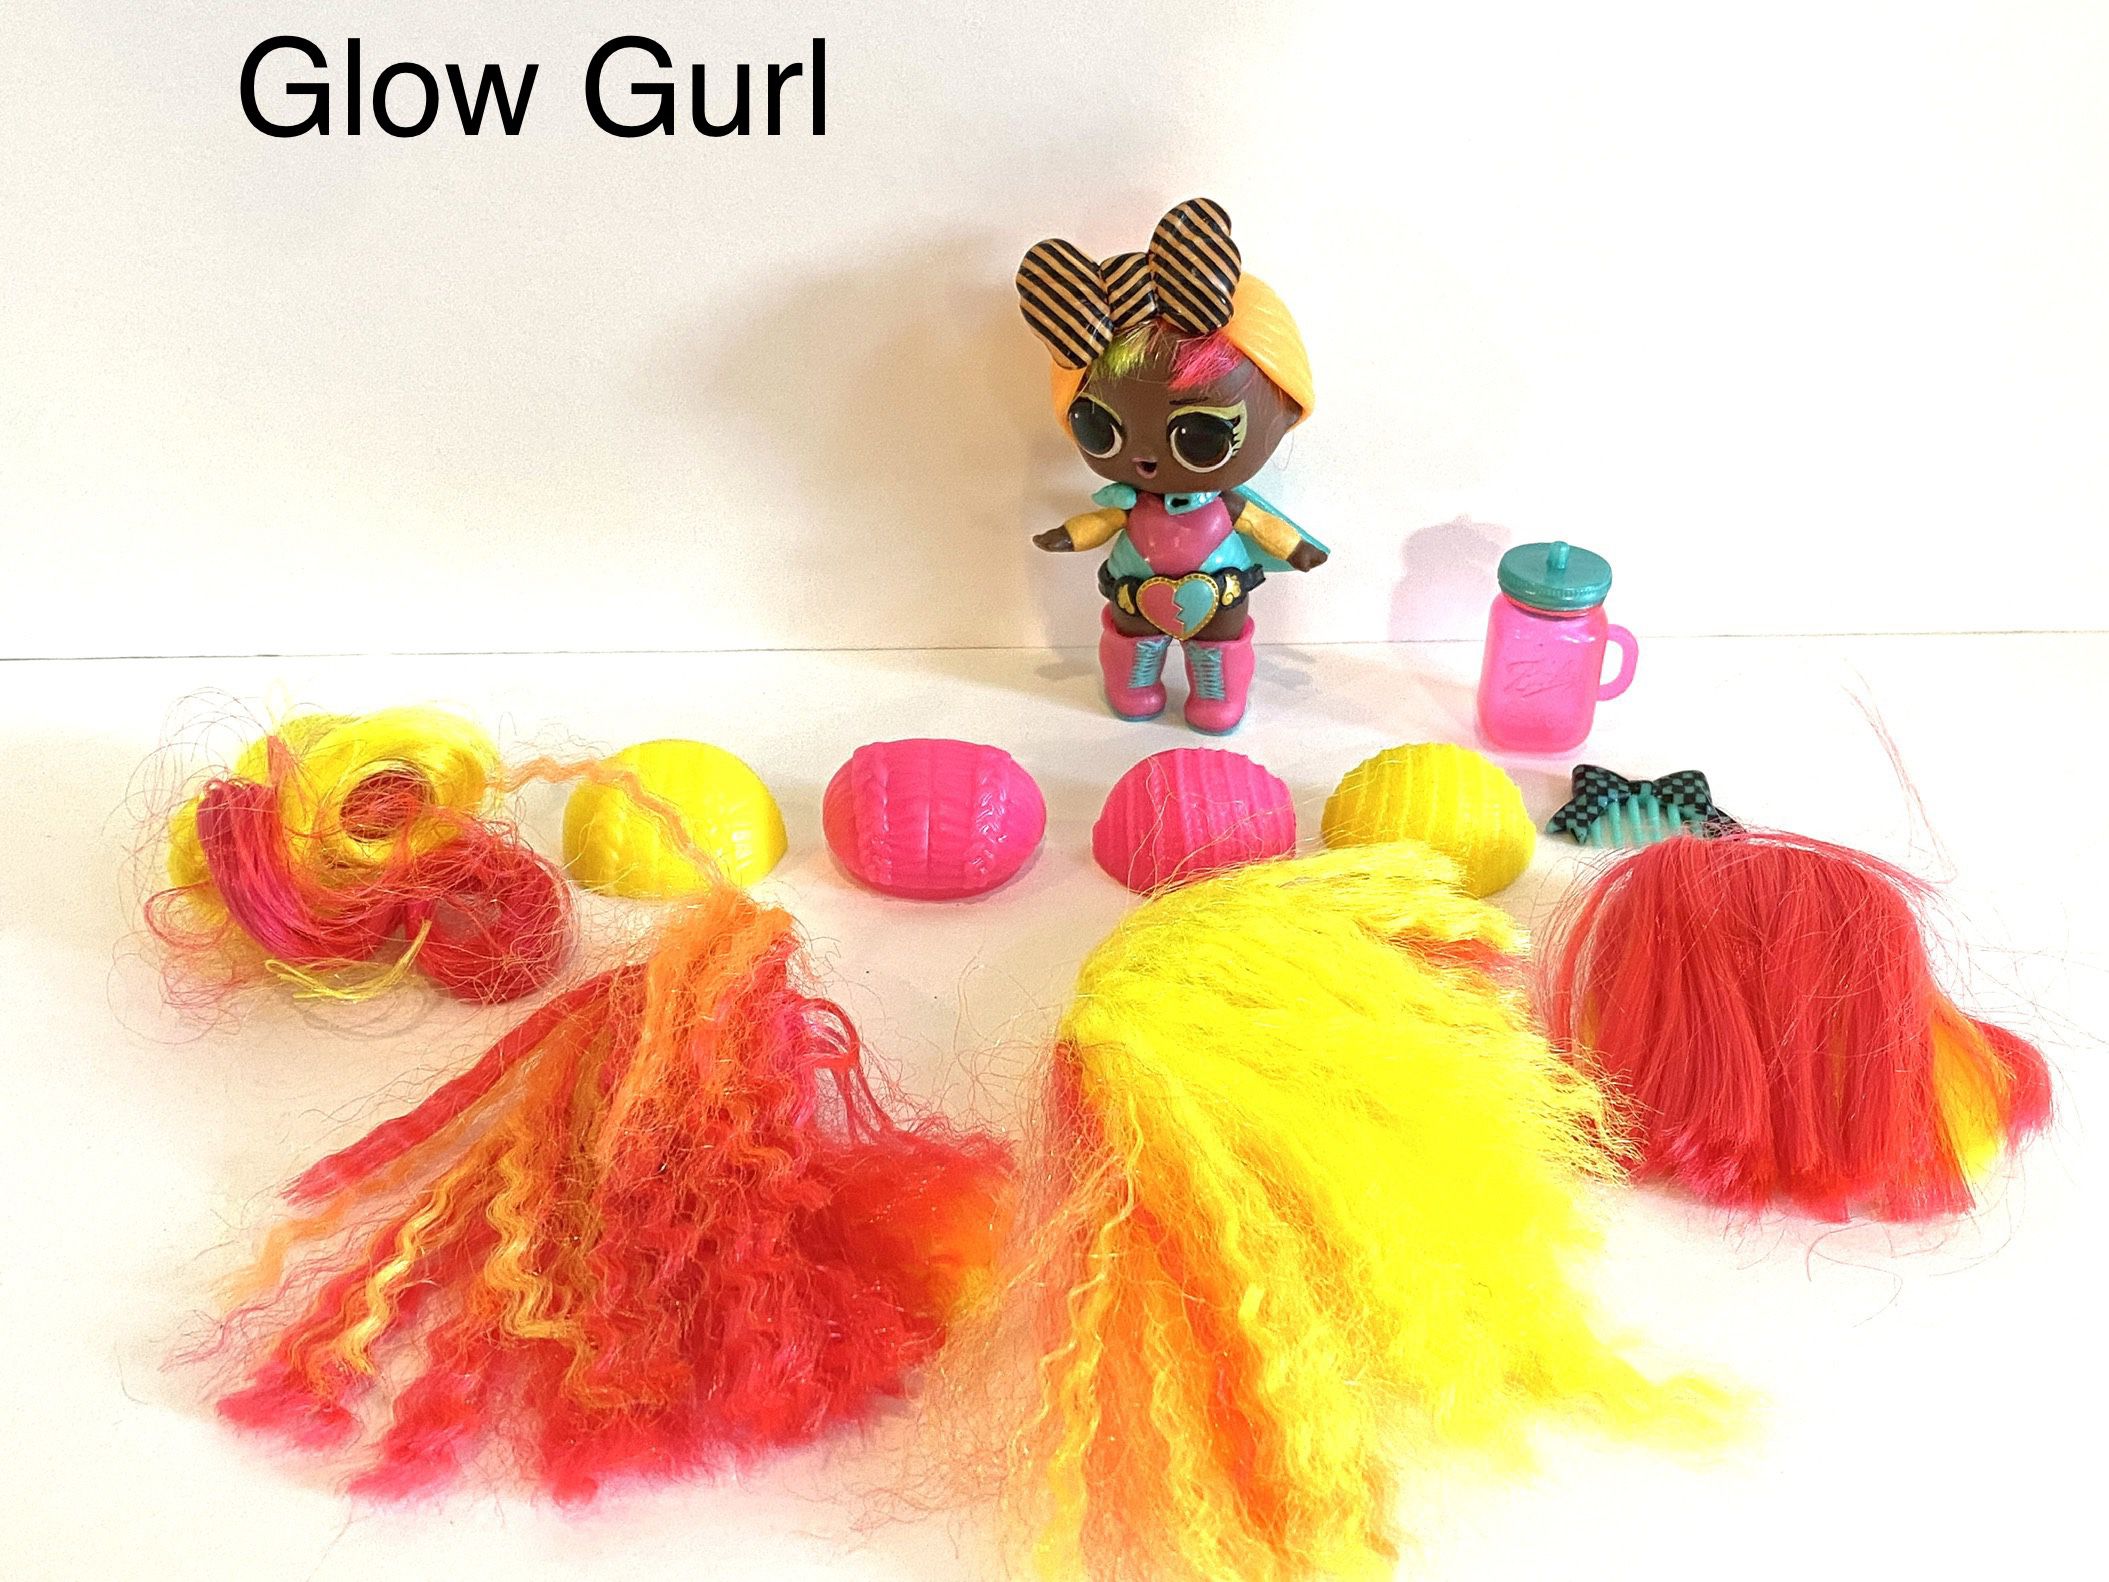 Glow Gurl Lol Surprise Dolls